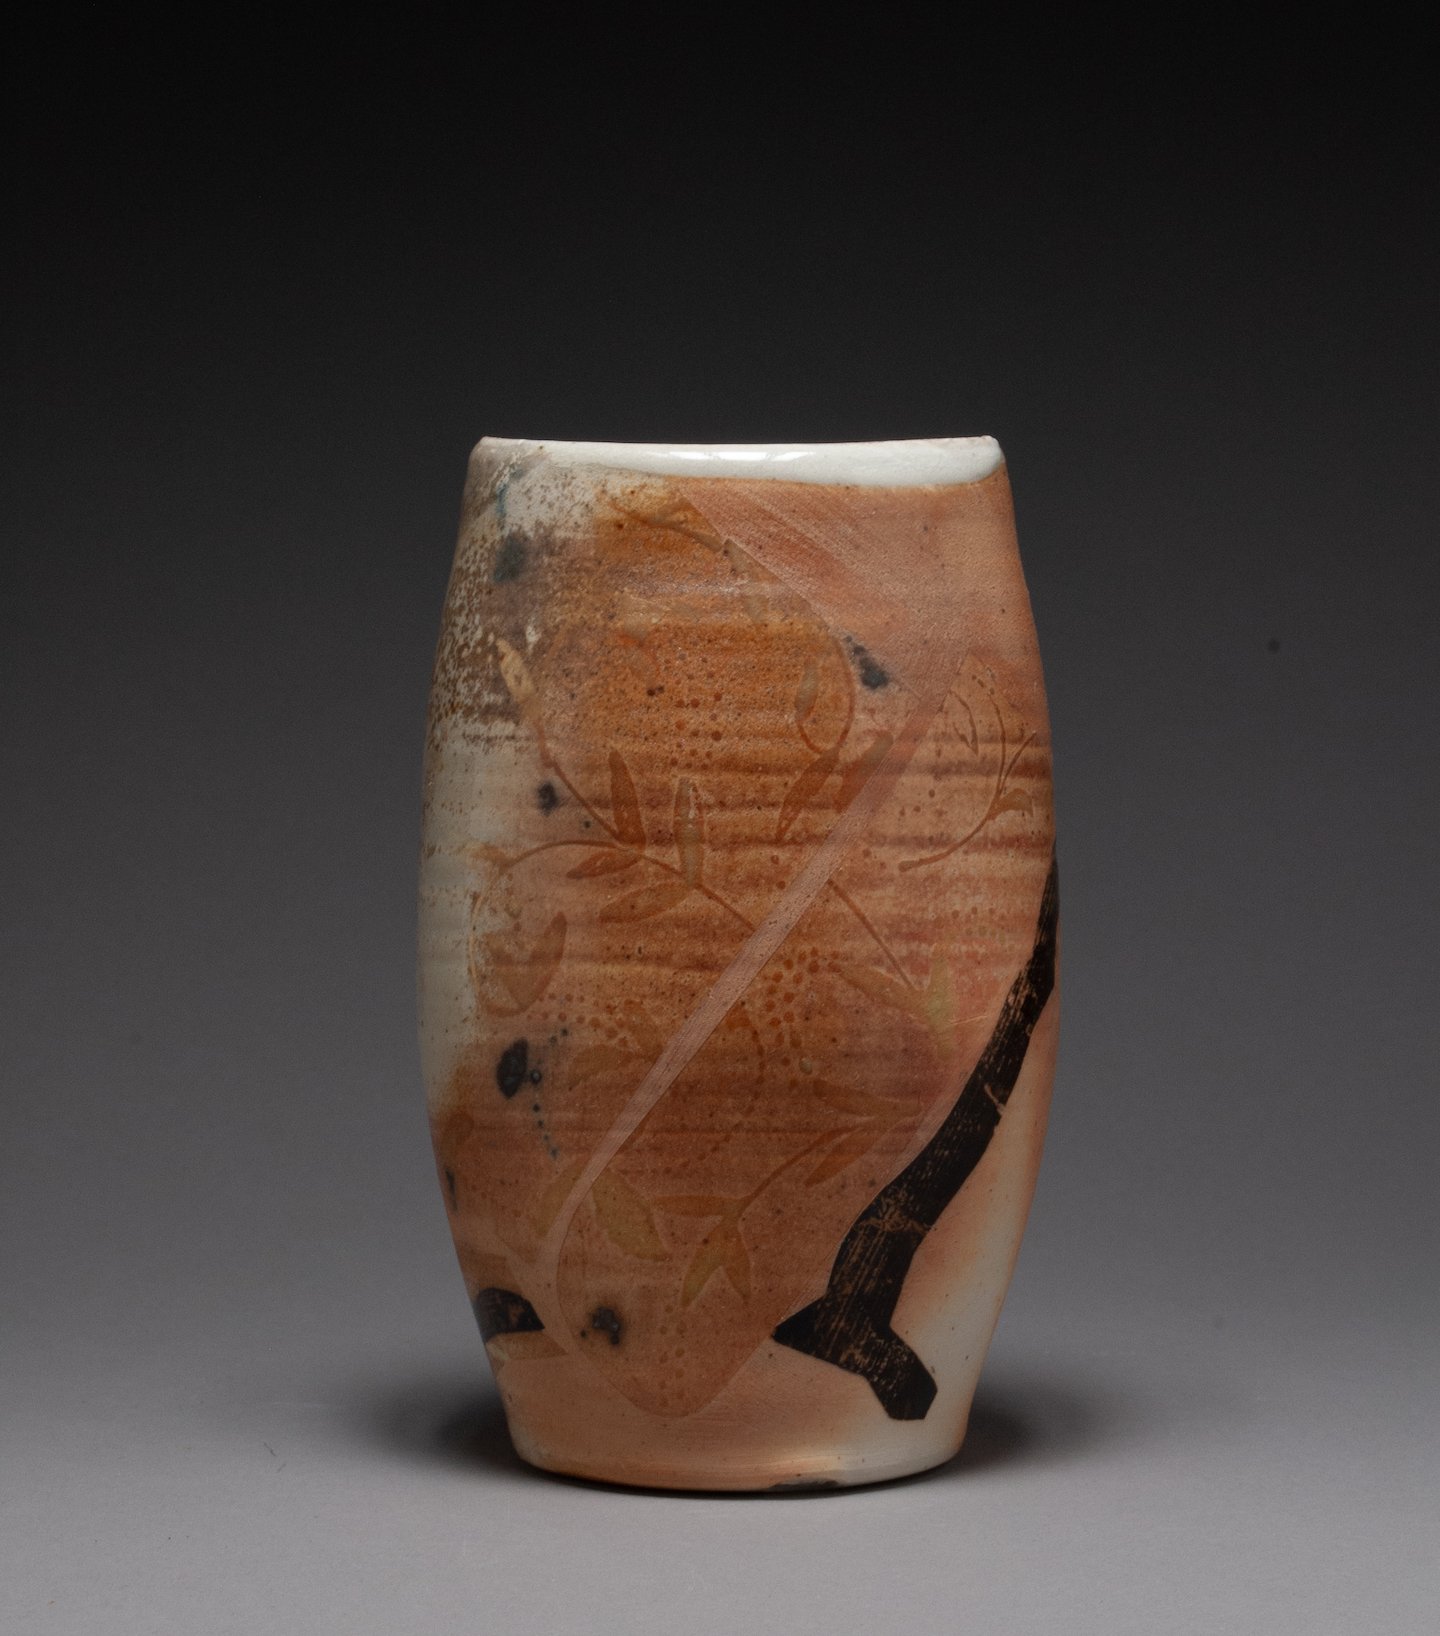    Fragments Vase  , 7.75”h x 5.25”w x 3.75”d, porcelain, wood fired 